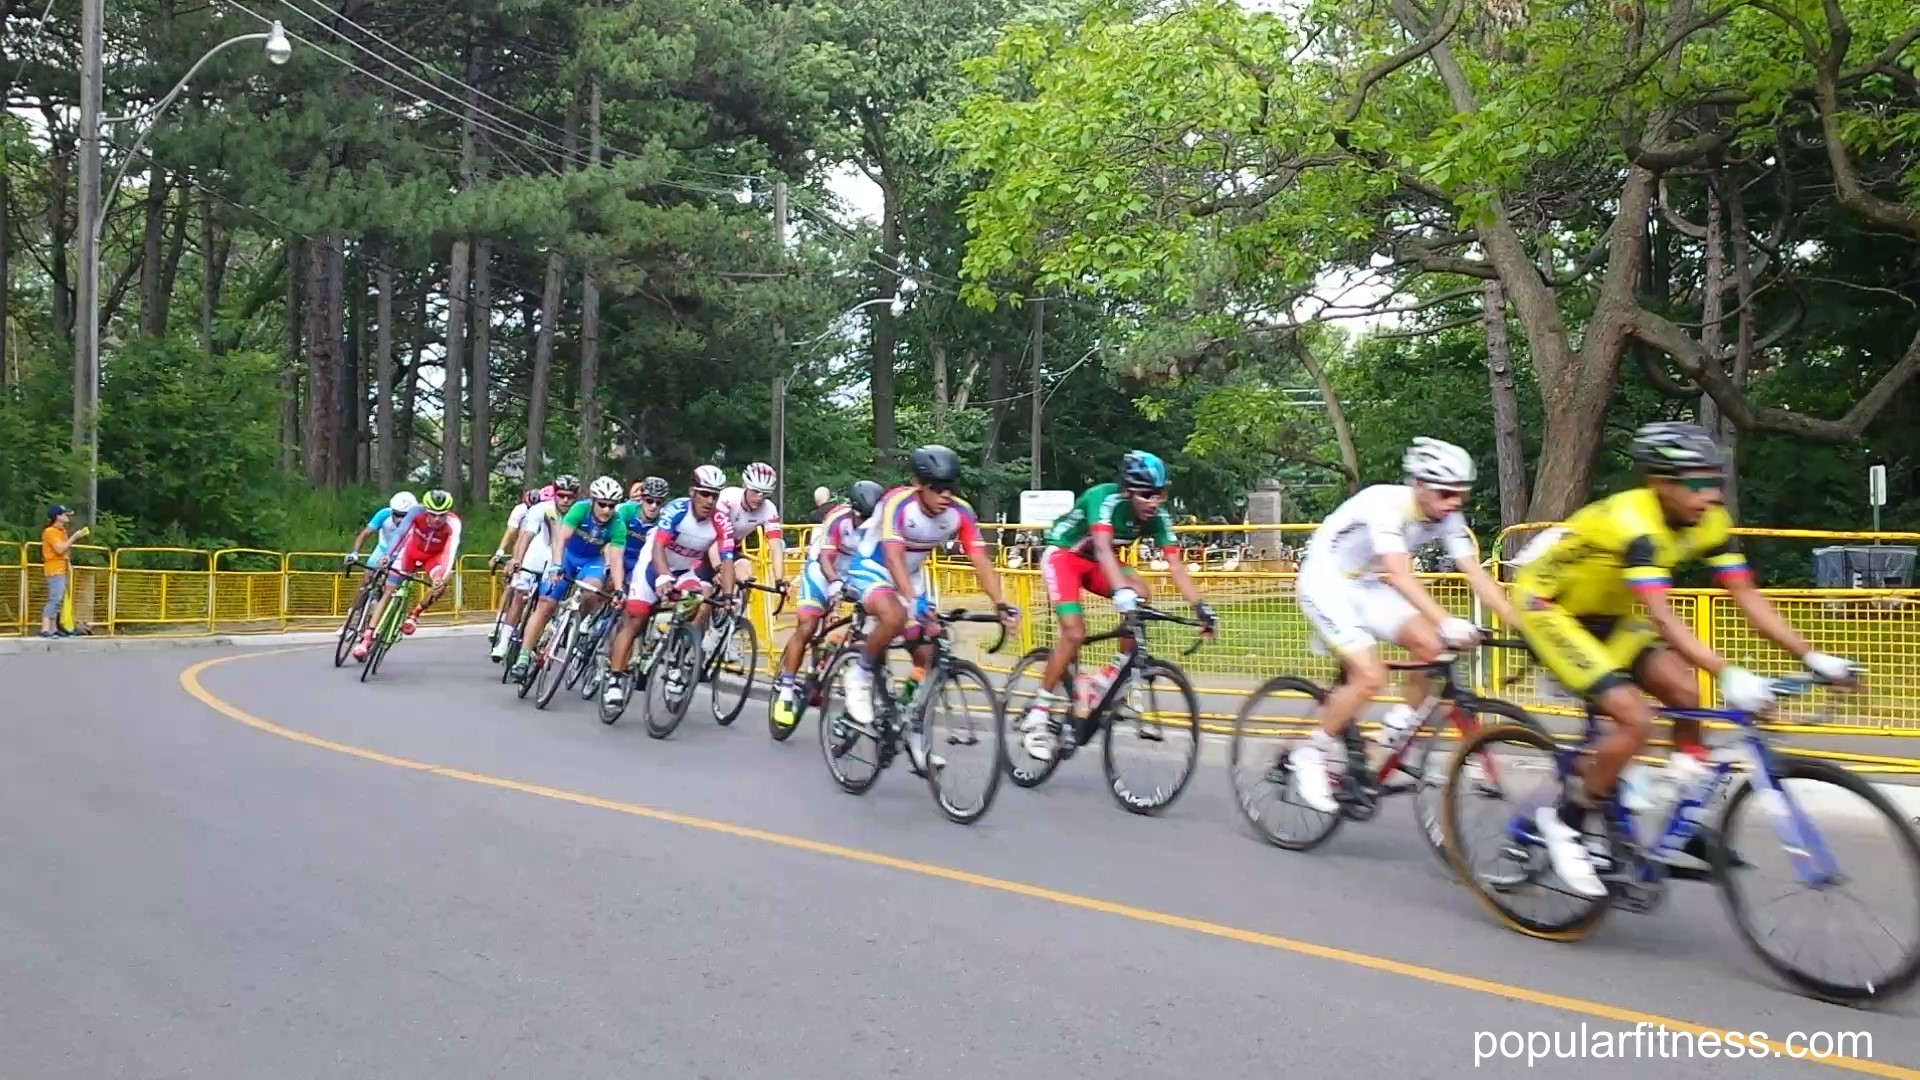 Men's bike race, men cycling in Pan Am Games Toronto - photo by popular fitness